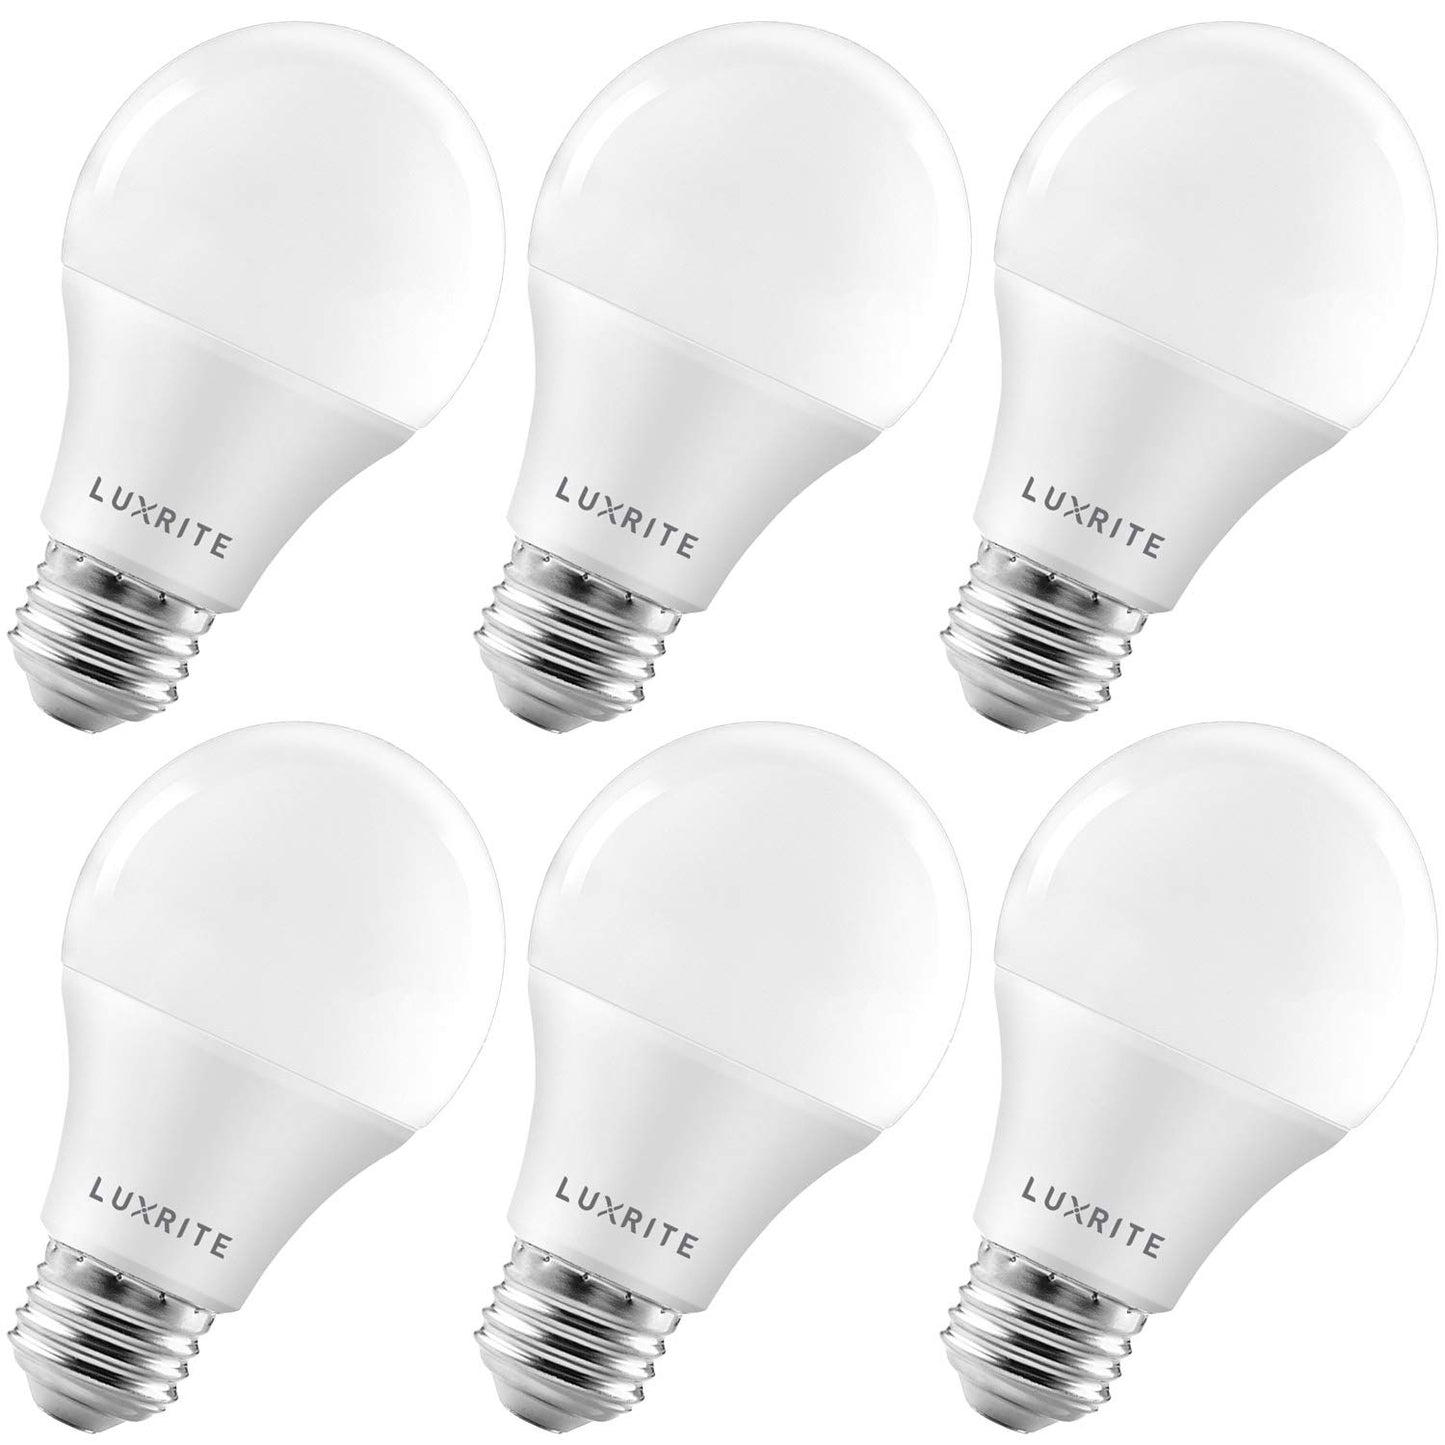 Luxrite LR21431 A19 LED Bulb 75W Equivalent, 1100 Lumens, 3000K Warm White, Dimmable Standard LED Light Bulb